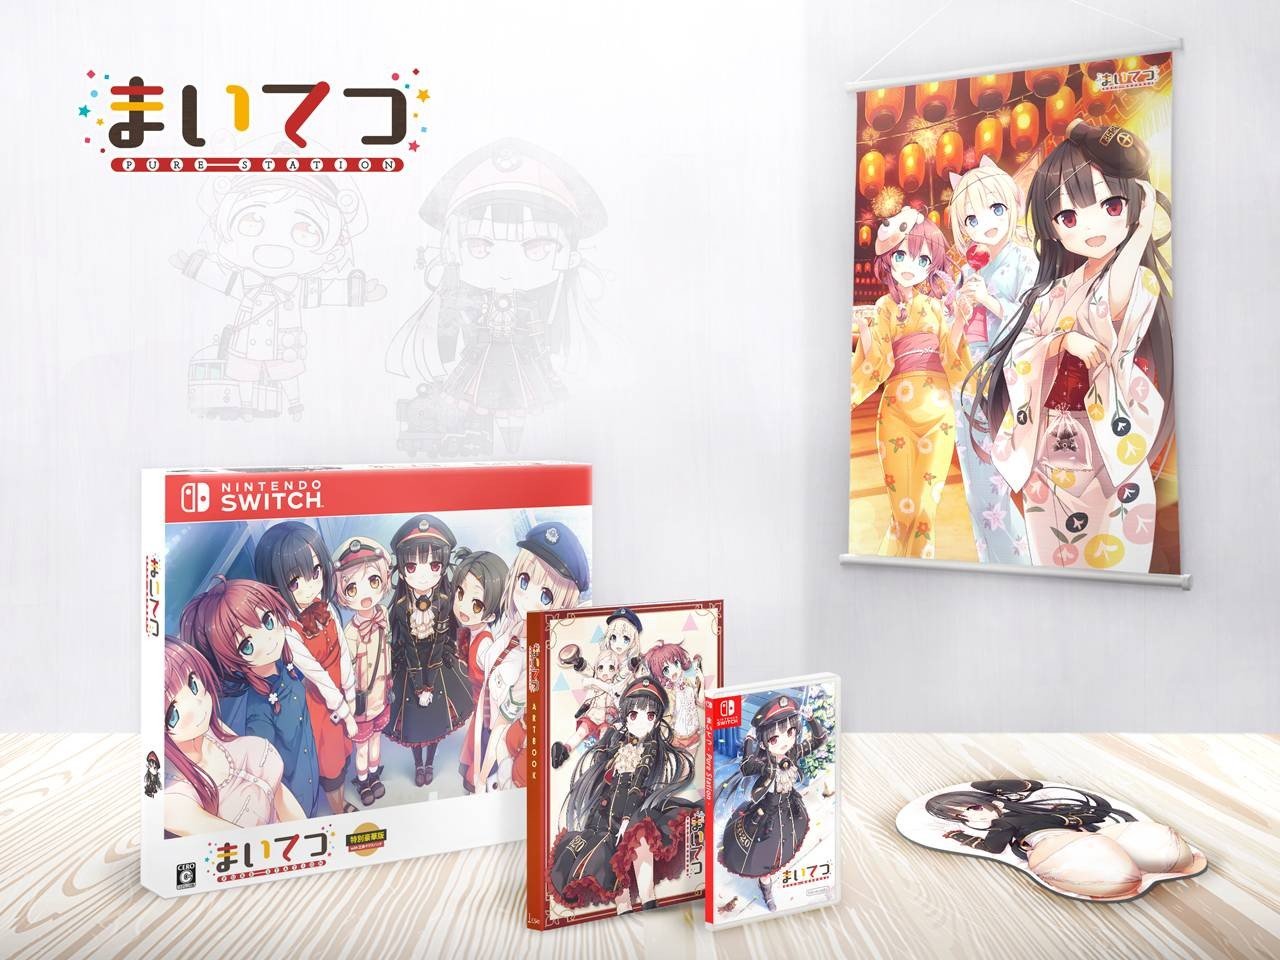  Maitetsu: Pure Station, Asia, Nintendo Switch, Switch, Multi-language, Lose, 愛上火車, Pure Station, Collector's Edition